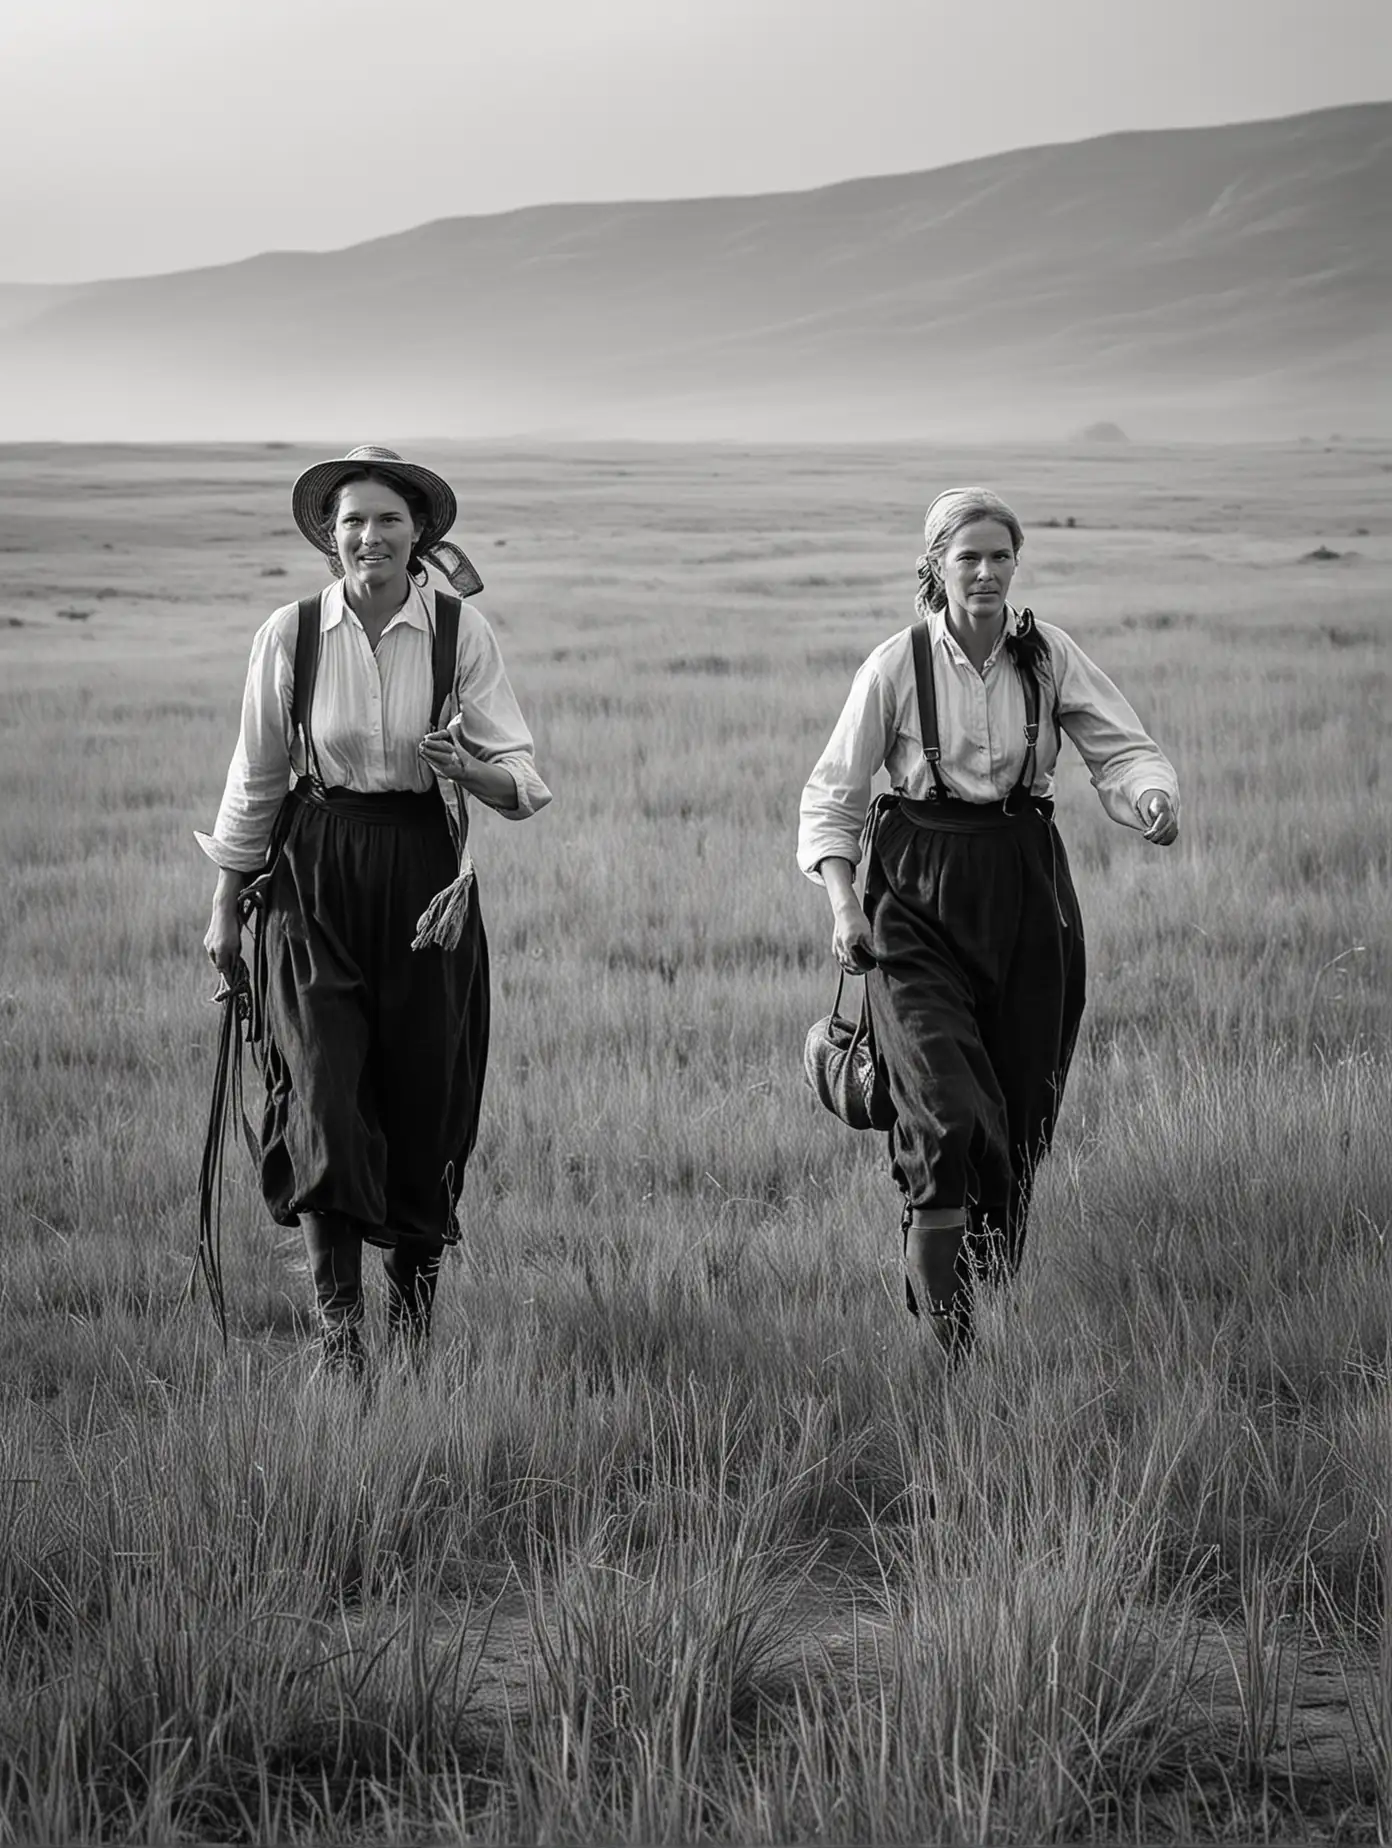 Pioneer Women Running to New Home on Vast Grassland